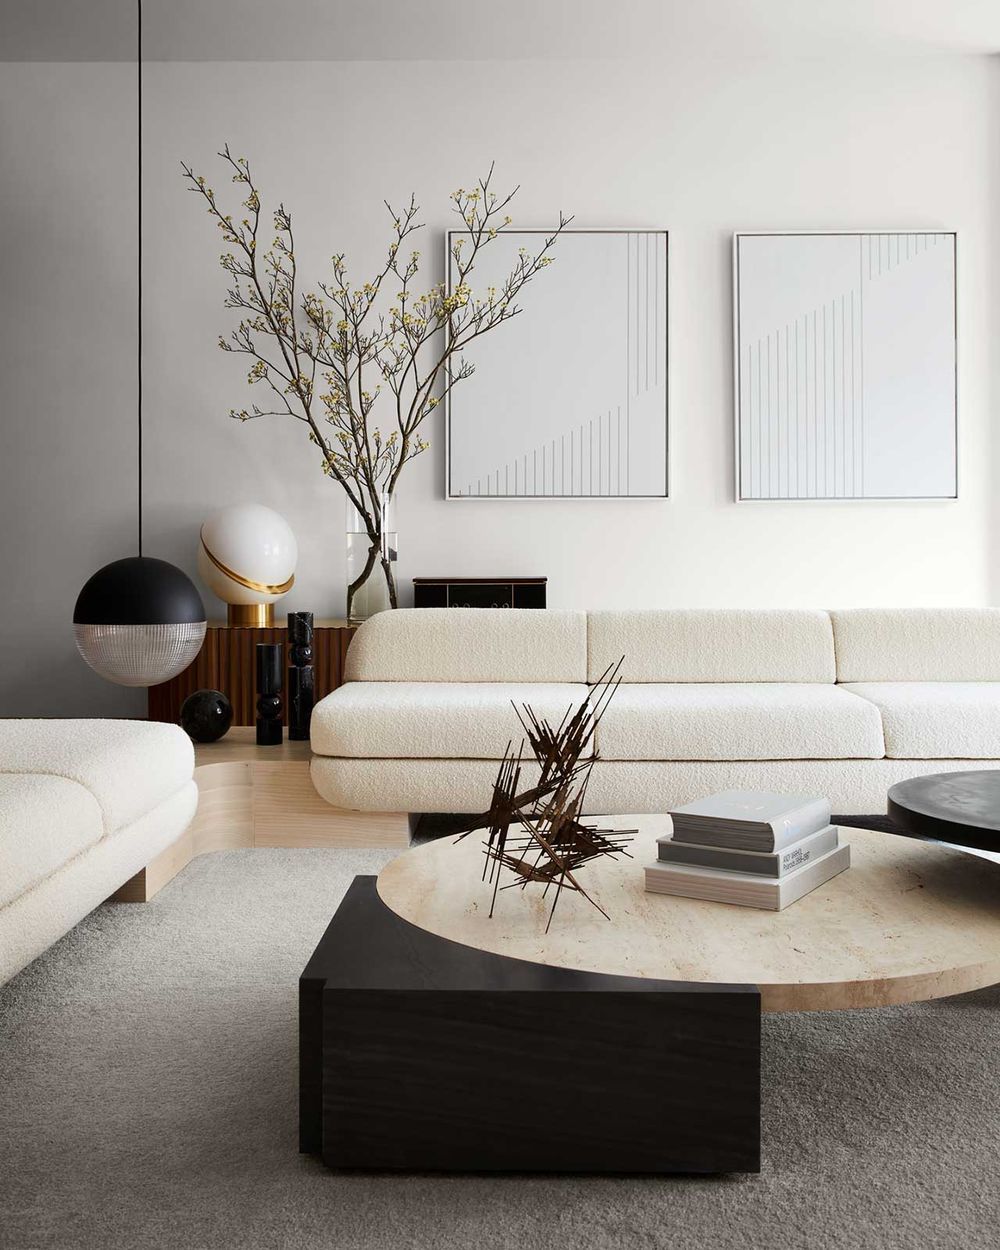 10 Contemporary Interior Design Elements